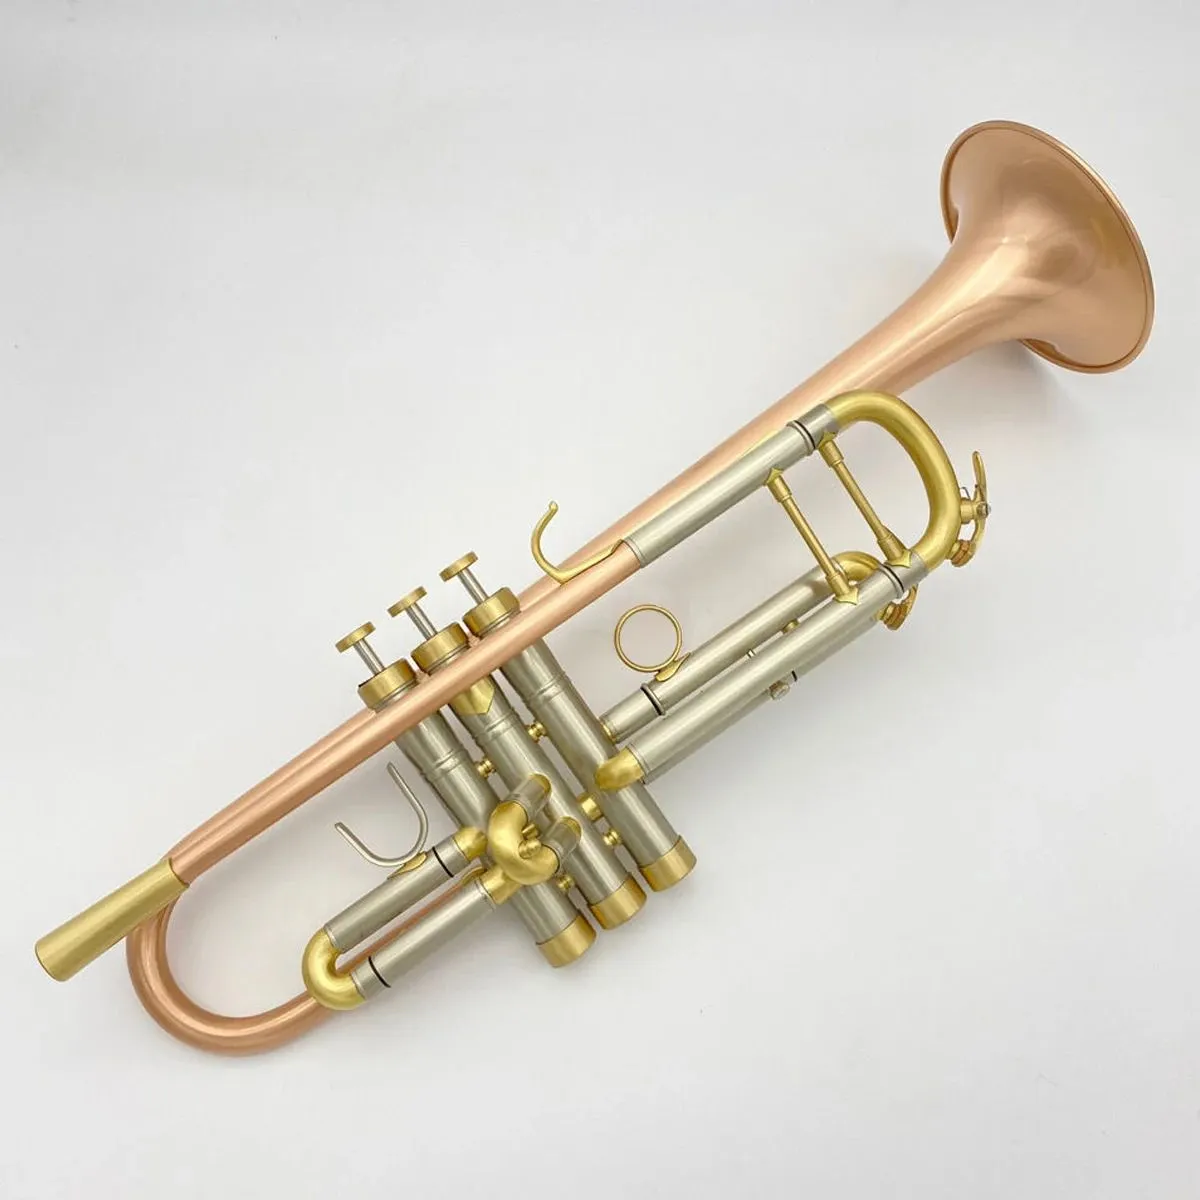 Amerikaans merkmodel high-end trompet muziekinstrument fosforbrons geborsteld versterkt de geluidskwaliteit en dikke trompet